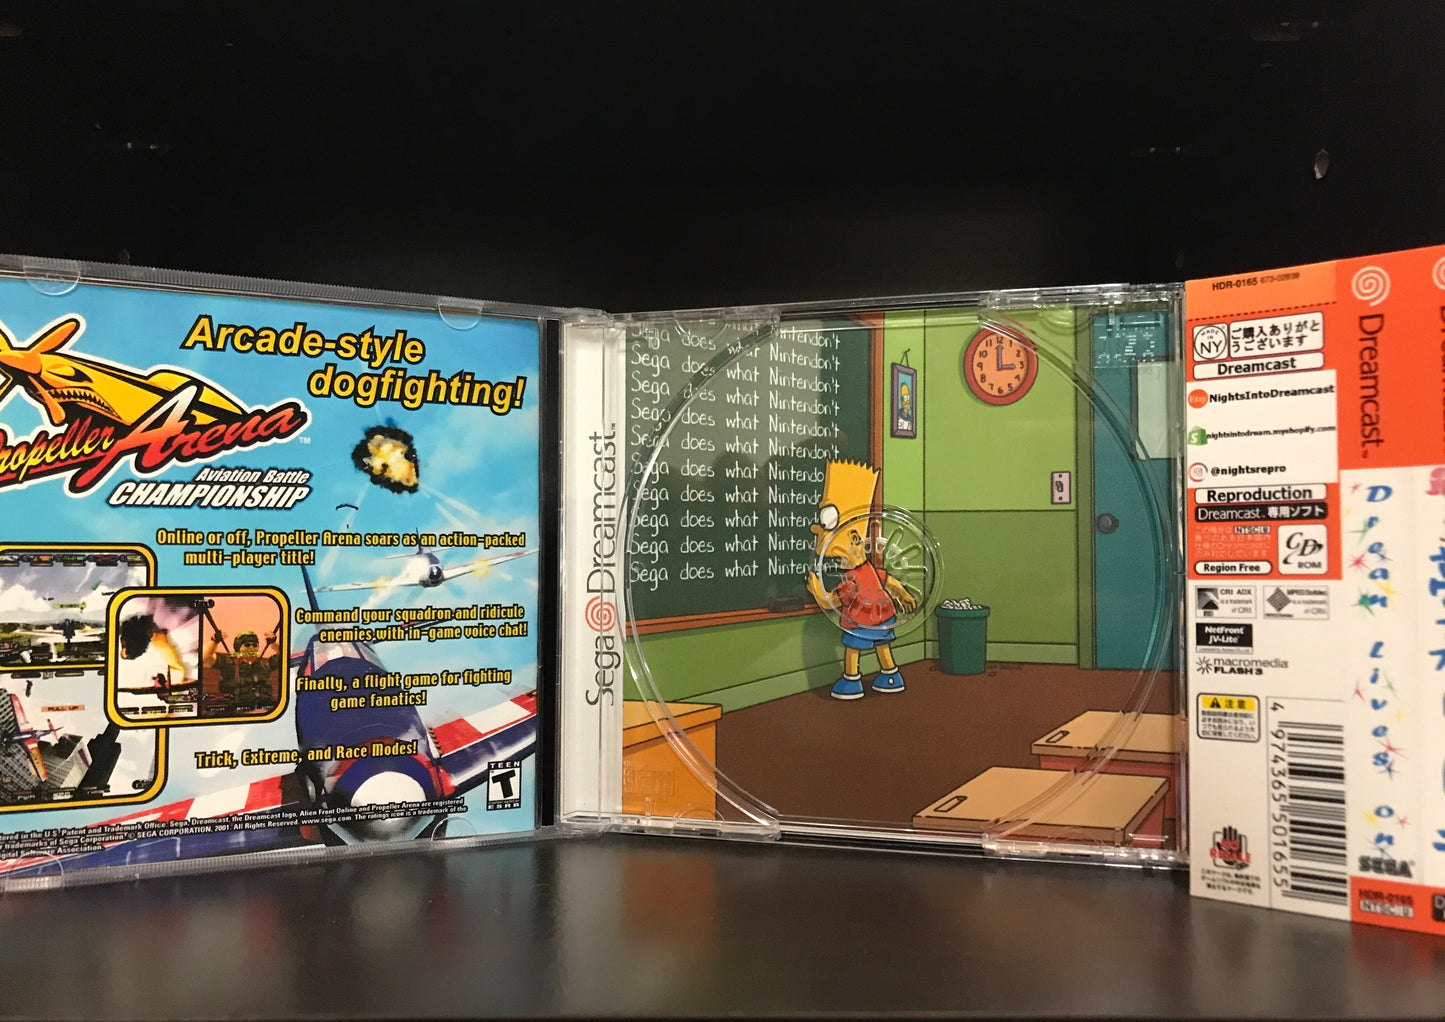 The Simpsons: Arcade Game [Sega Dreamcast] Reproduction